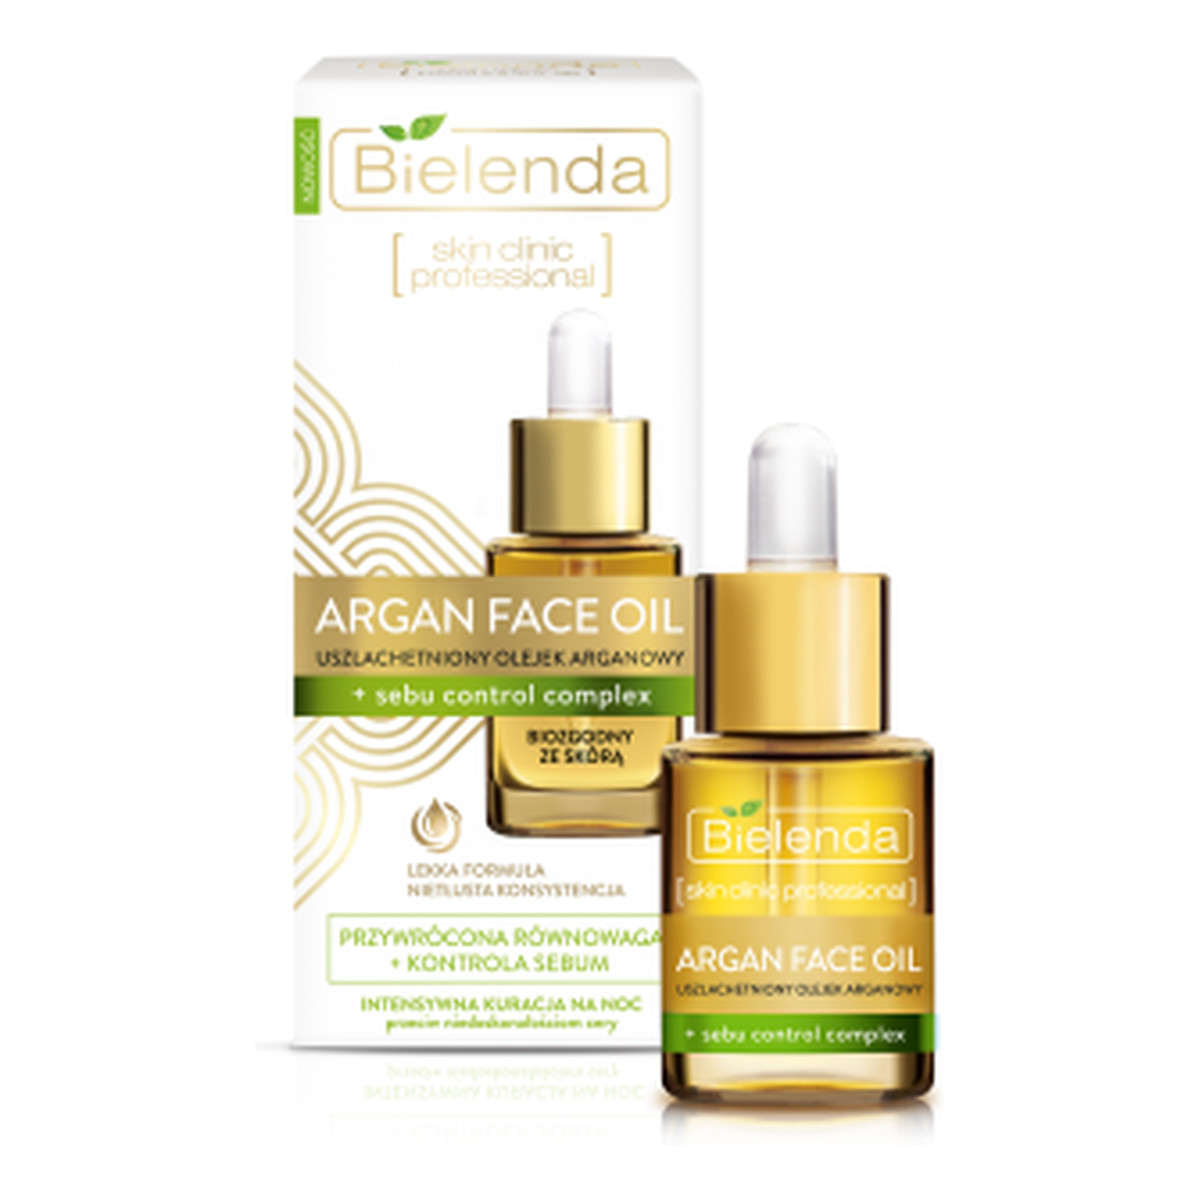 Bielenda Skin Clinic Professional Argan Face Oil Uszlachetniony Olejek Arganowy + Sebu Control Complex 15ml